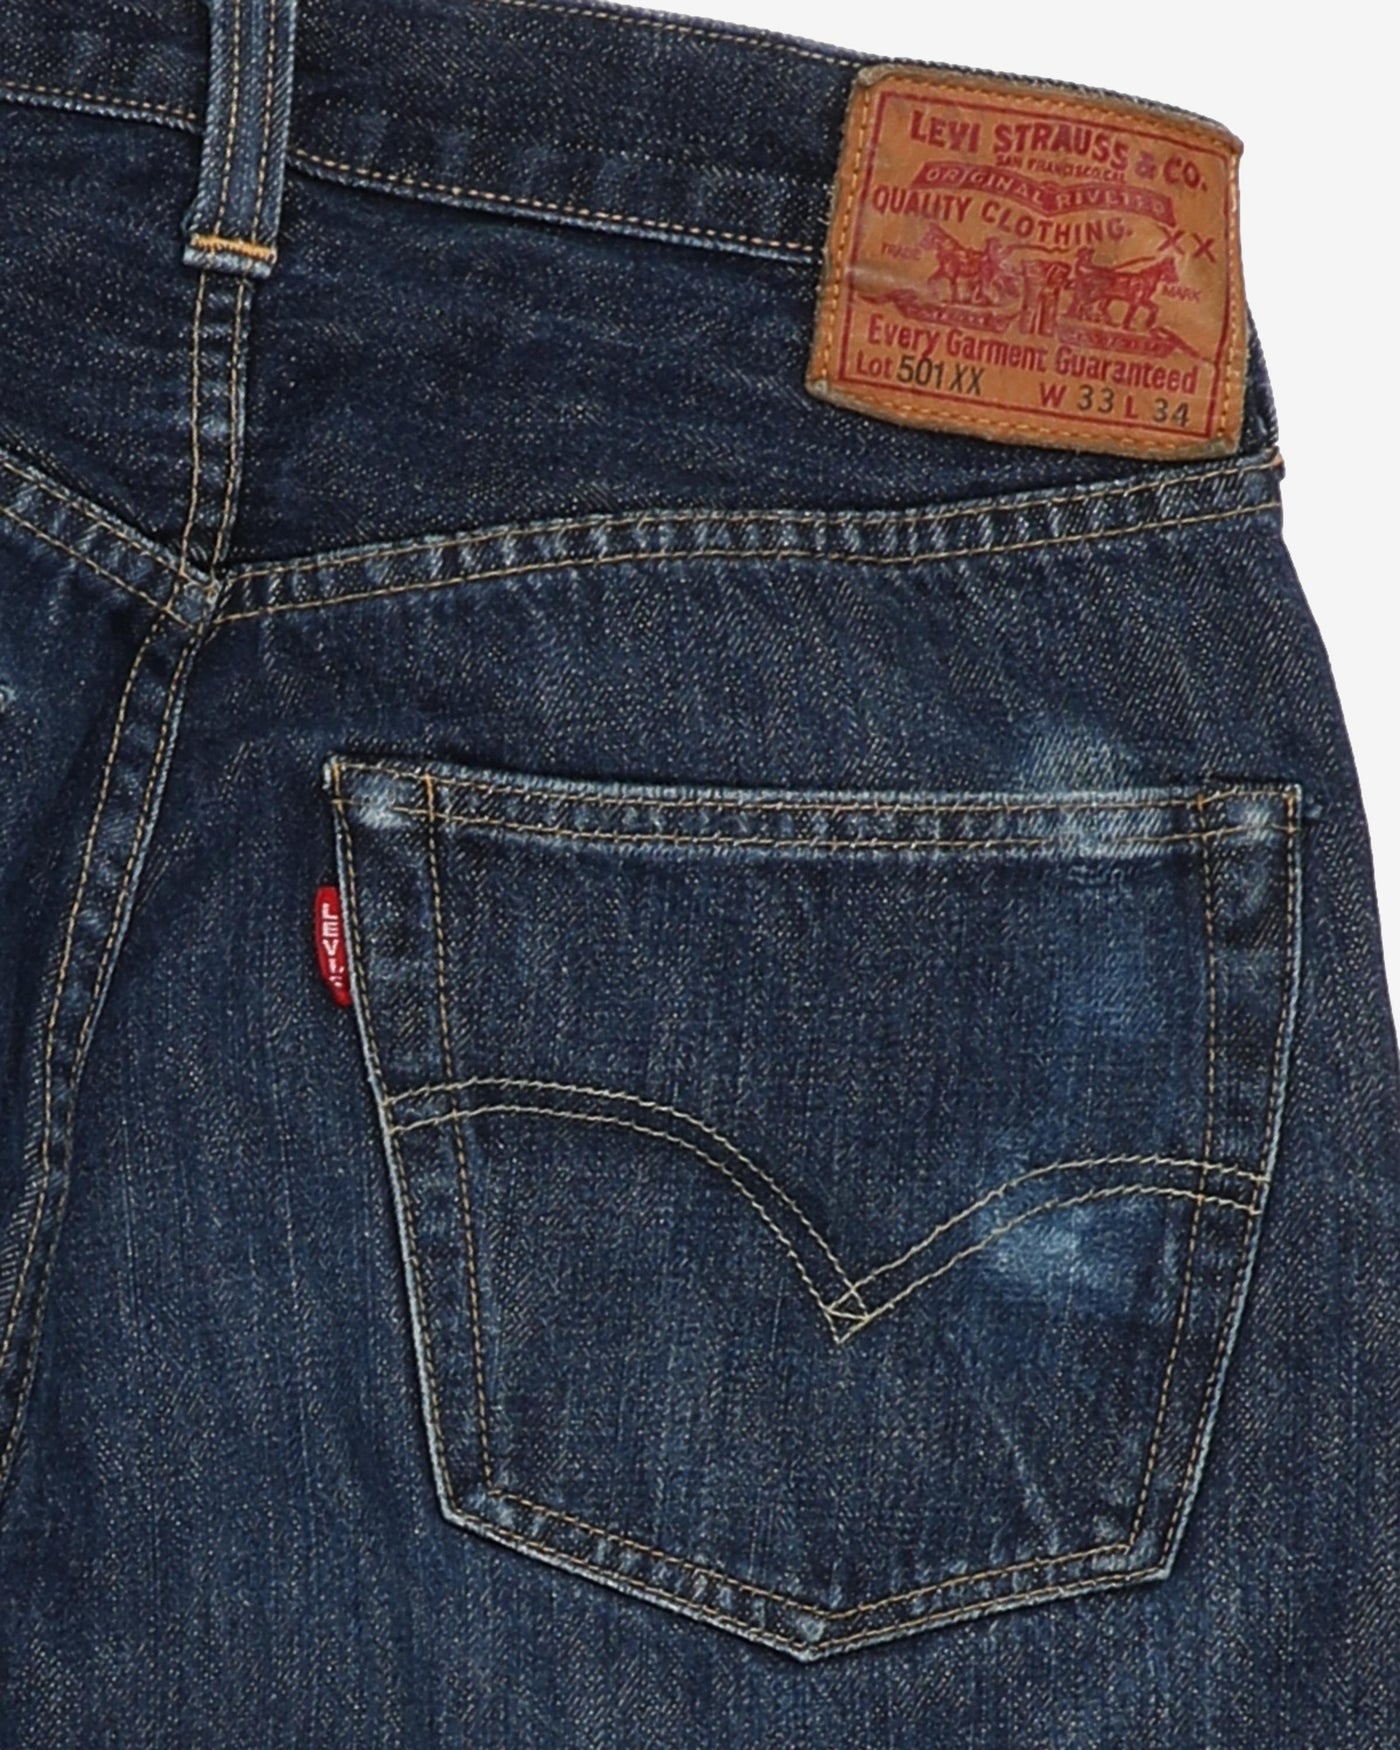 Levi's Big E Remake Dark Blue Denim Jeans - W32 L30